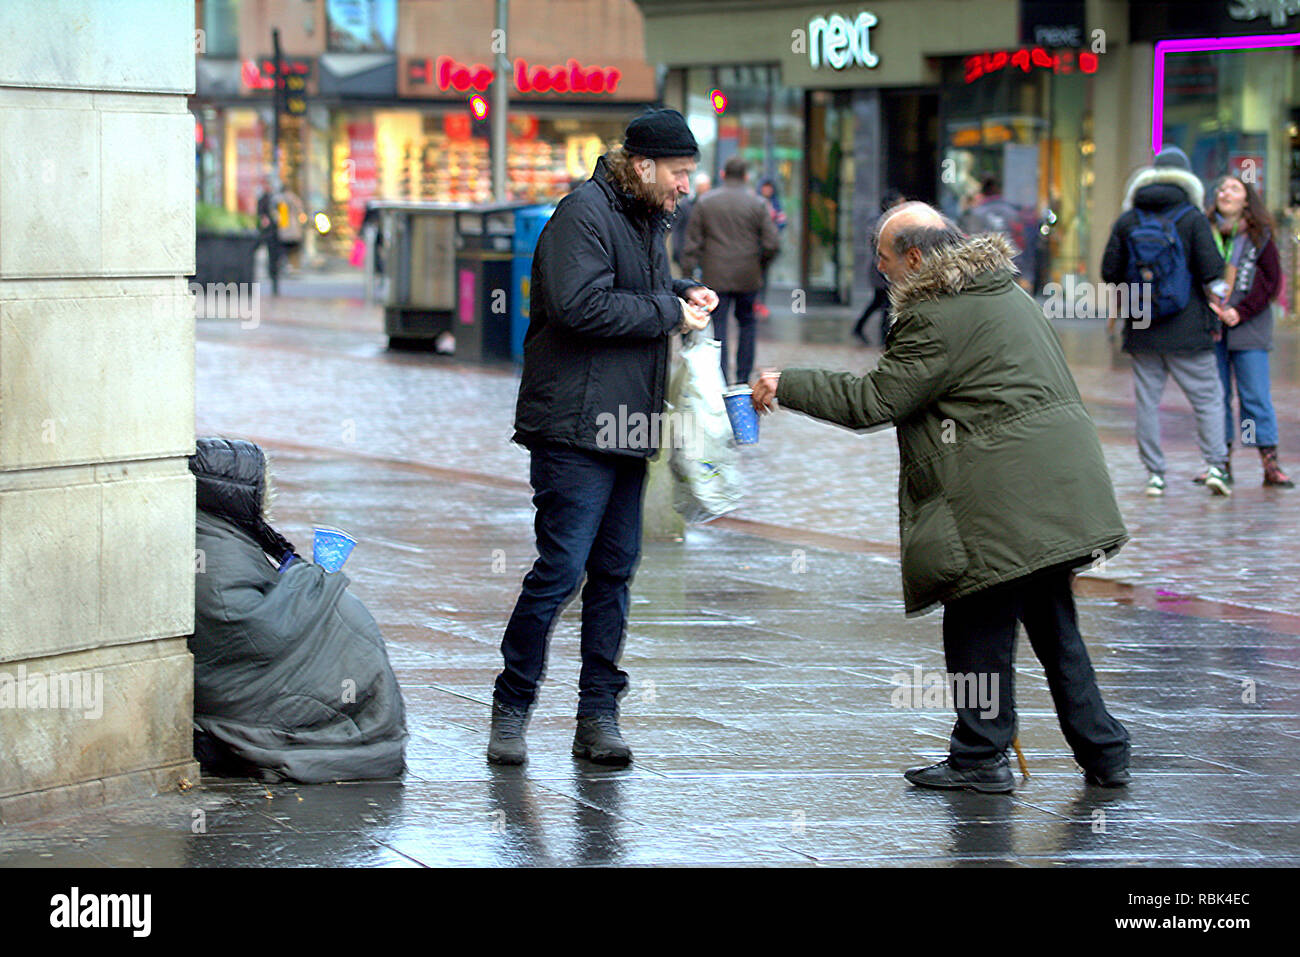 homeless poor person begging unidentifiable on the  wet  Argyle street shopping area  Glasgow scotland uk Stock Photo